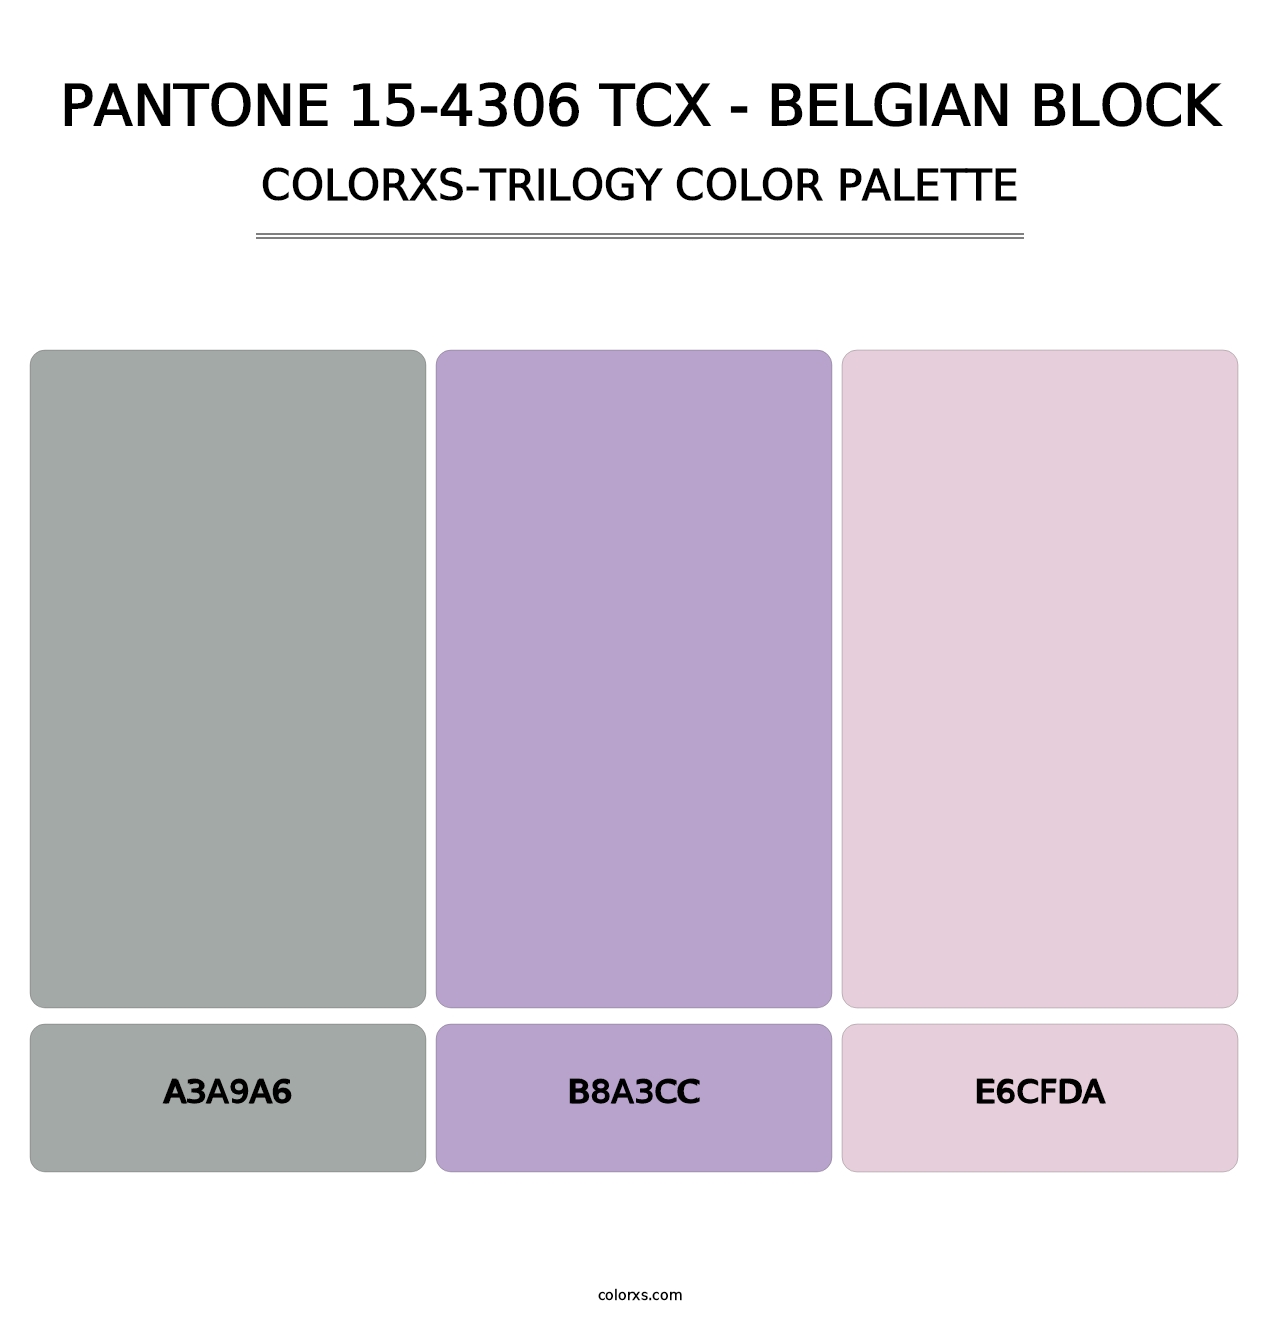 PANTONE 15-4306 TCX - Belgian Block - Colorxs Trilogy Palette